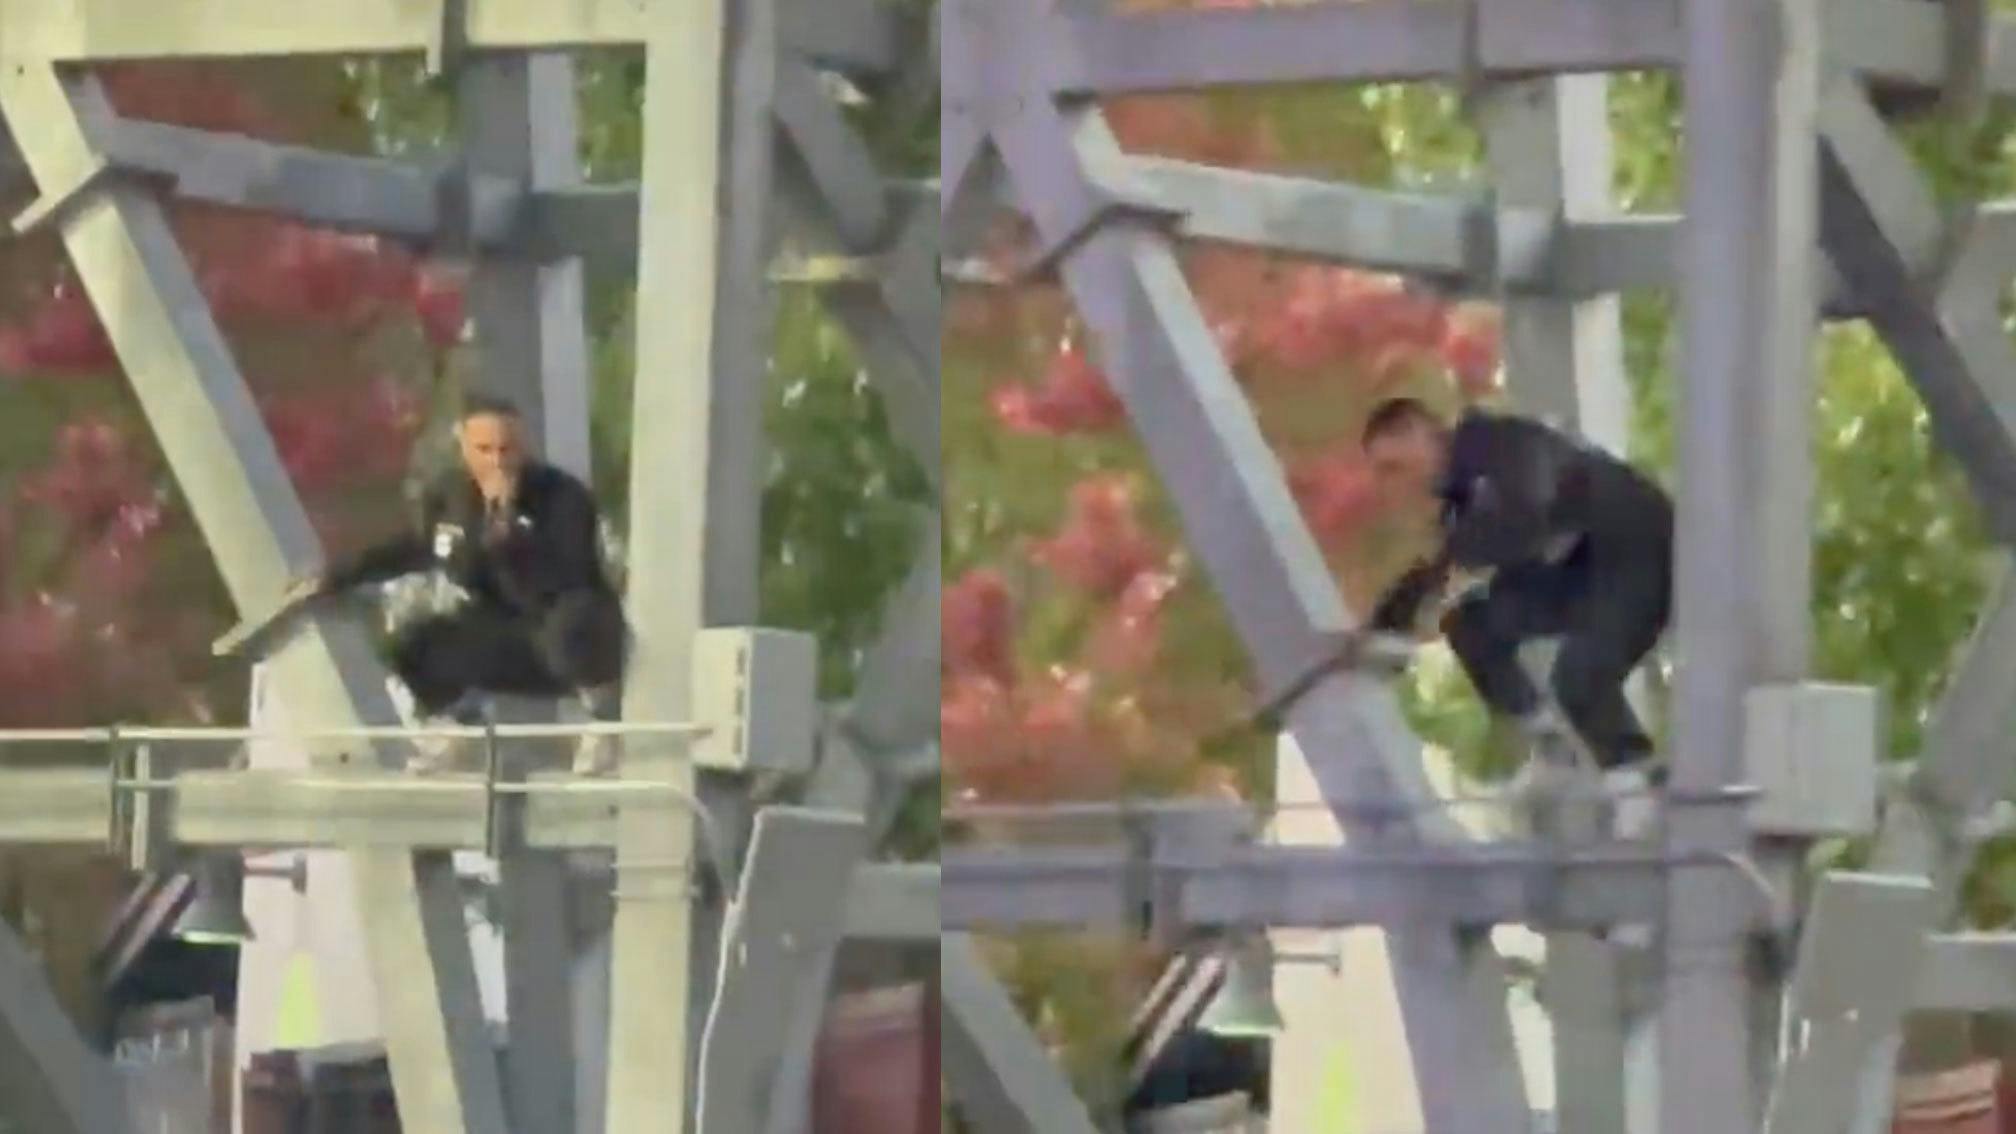 Watch FEVER 333's Jason Aalon Butler jump off scaffolding mid-performance